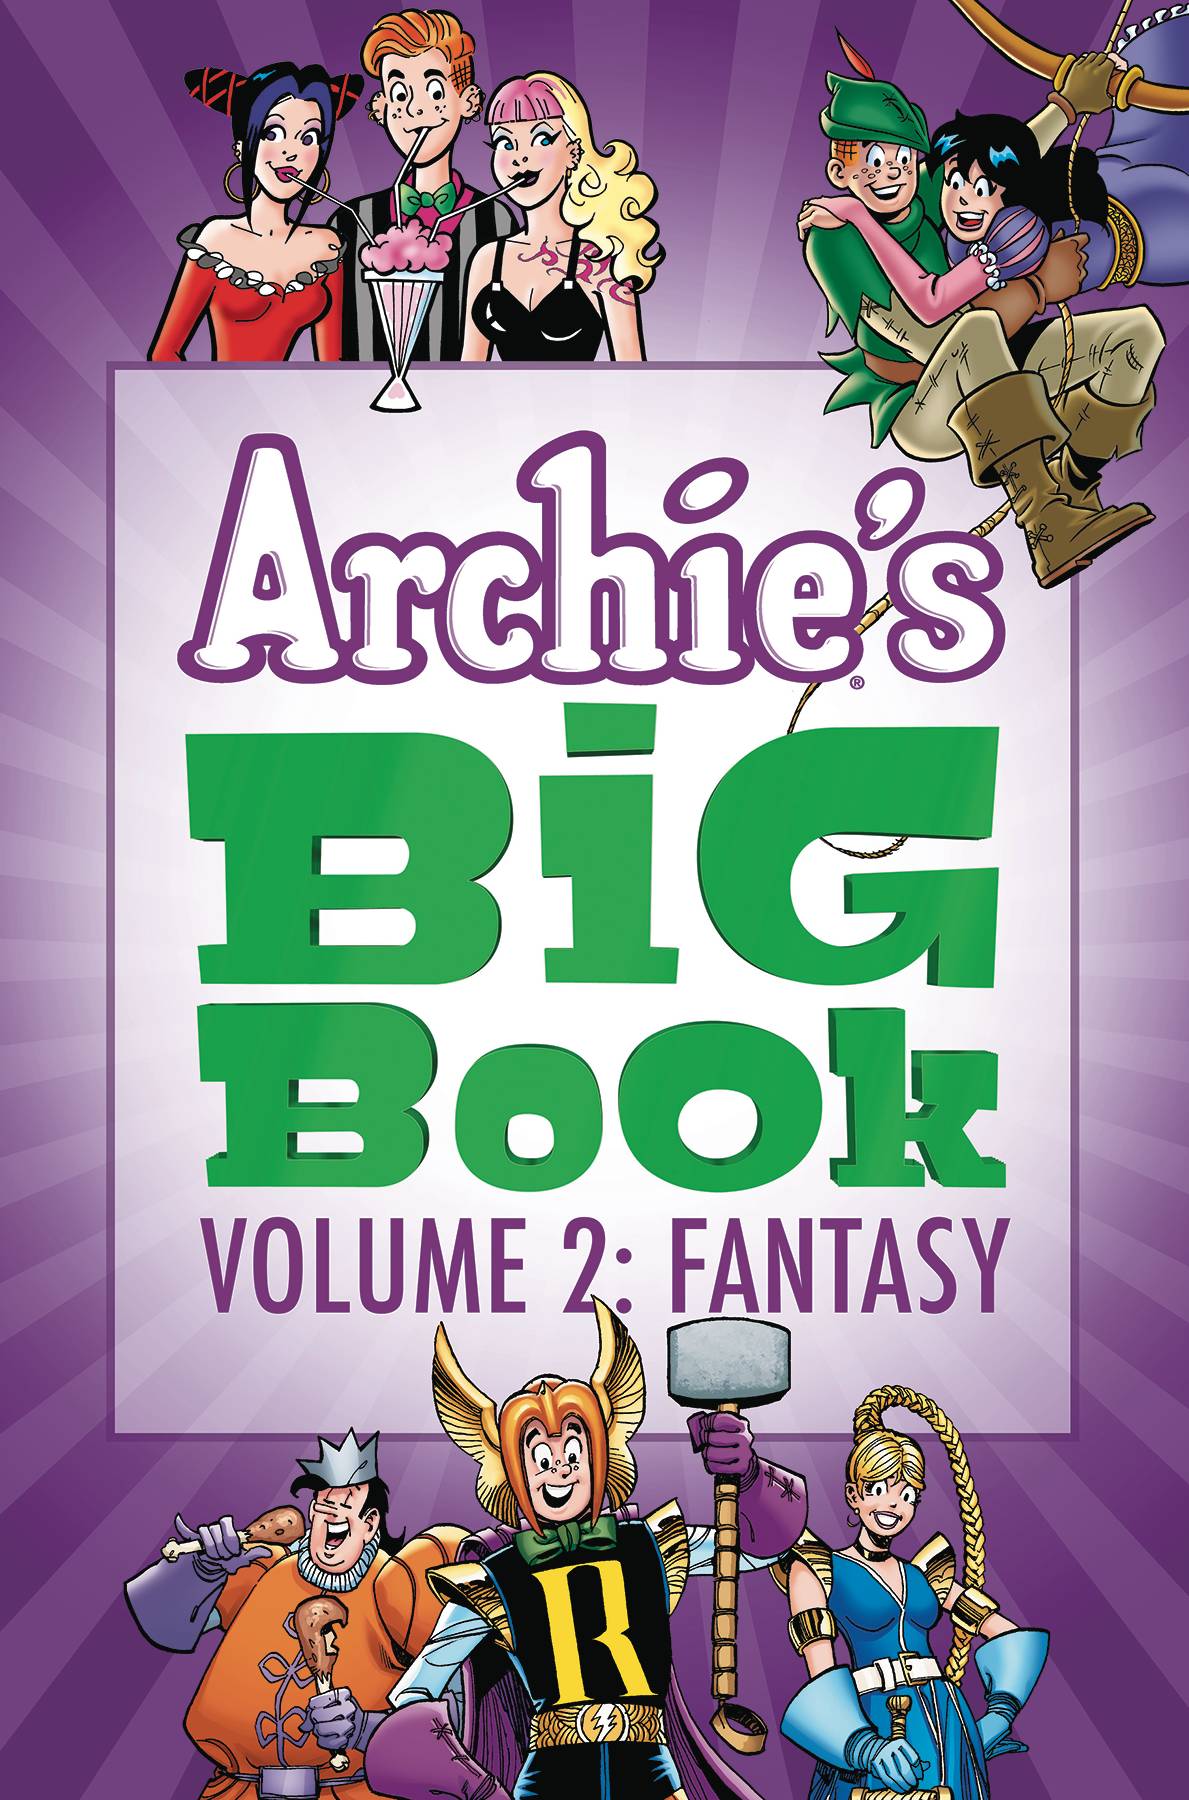 Archies Big Book Graphic Novel Volume 2 Fantasy